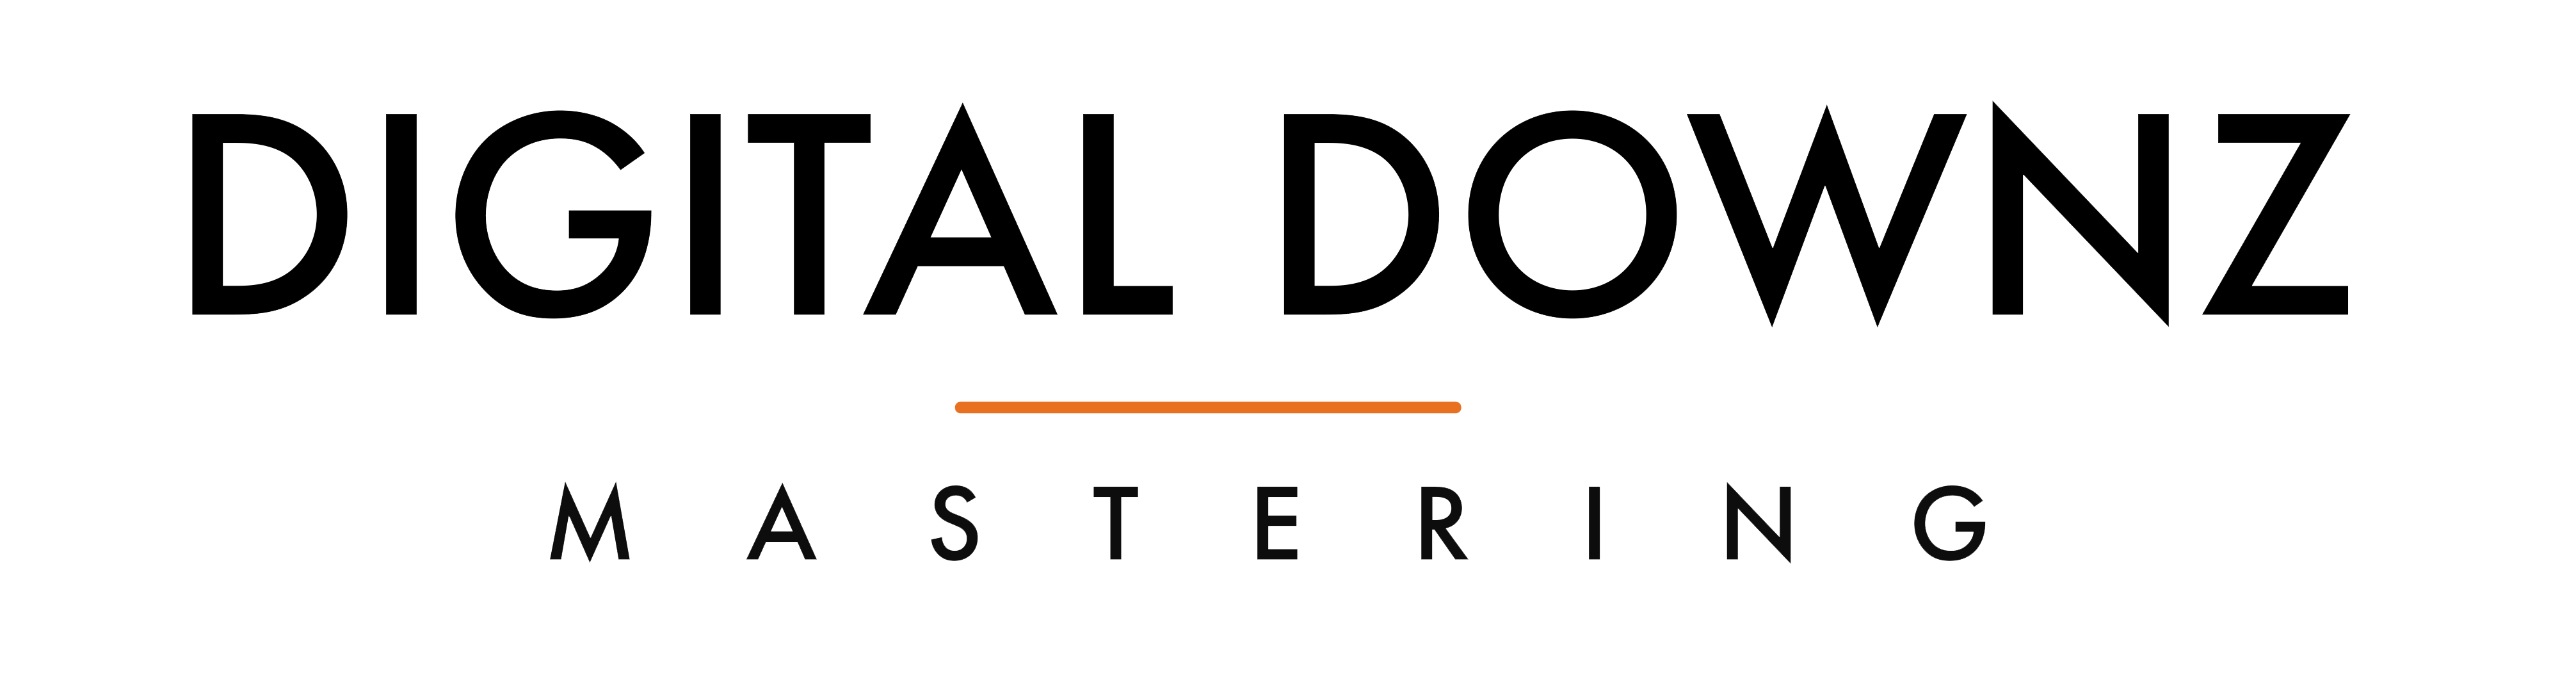 Digital Downz Mastering